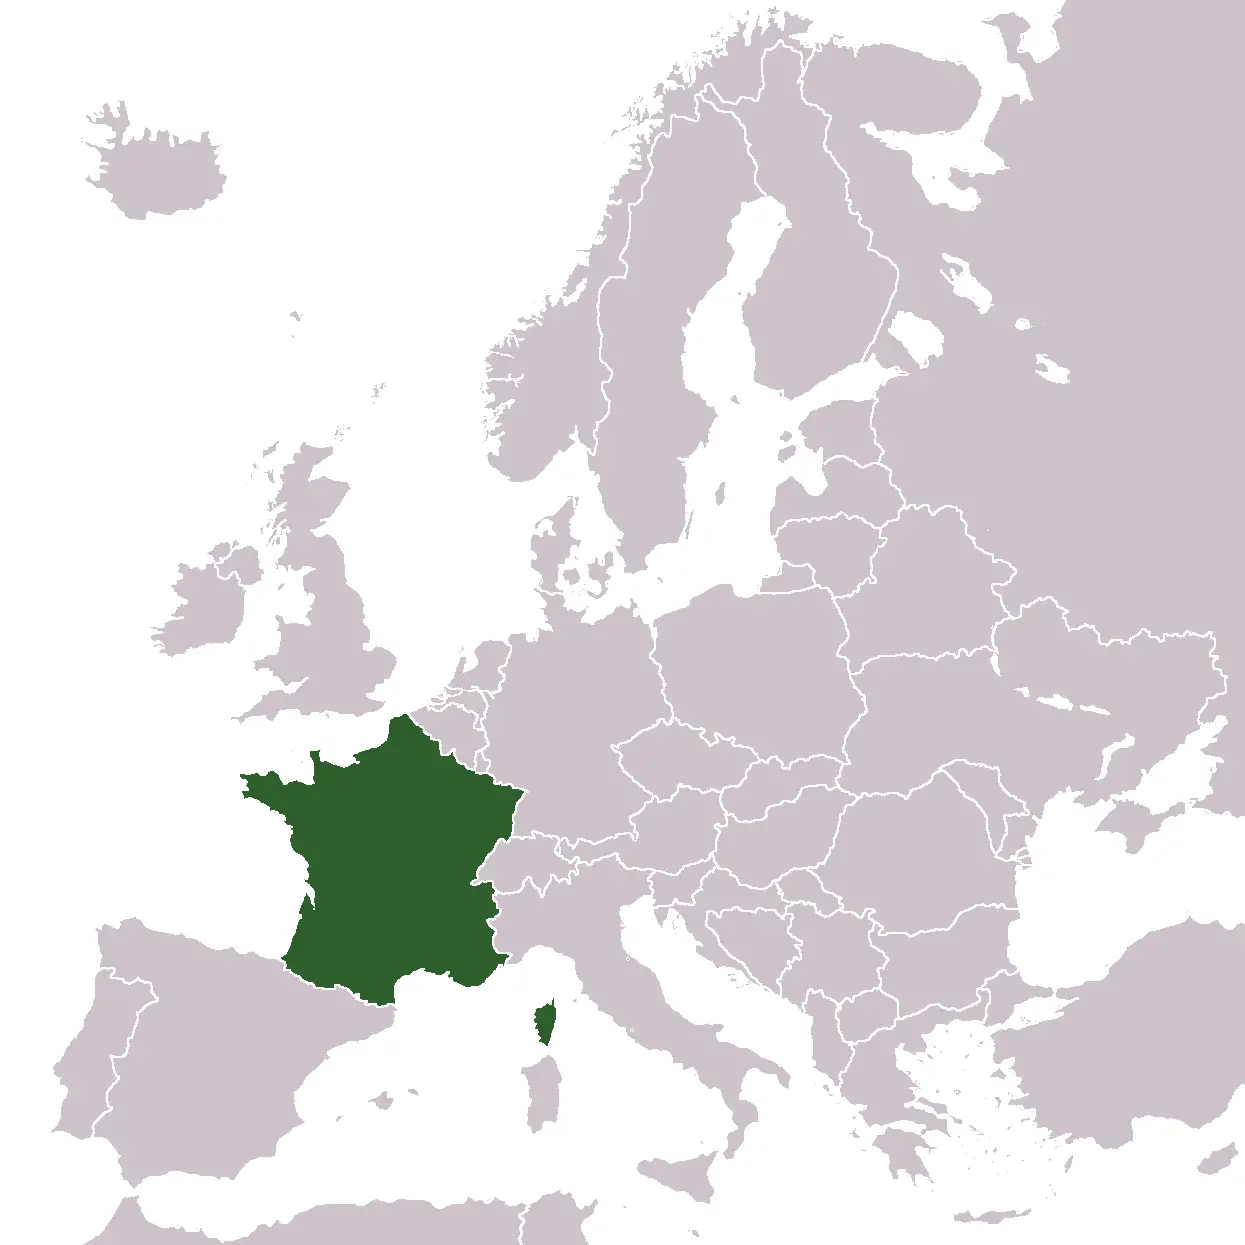 Europe Location France Mapsofnet